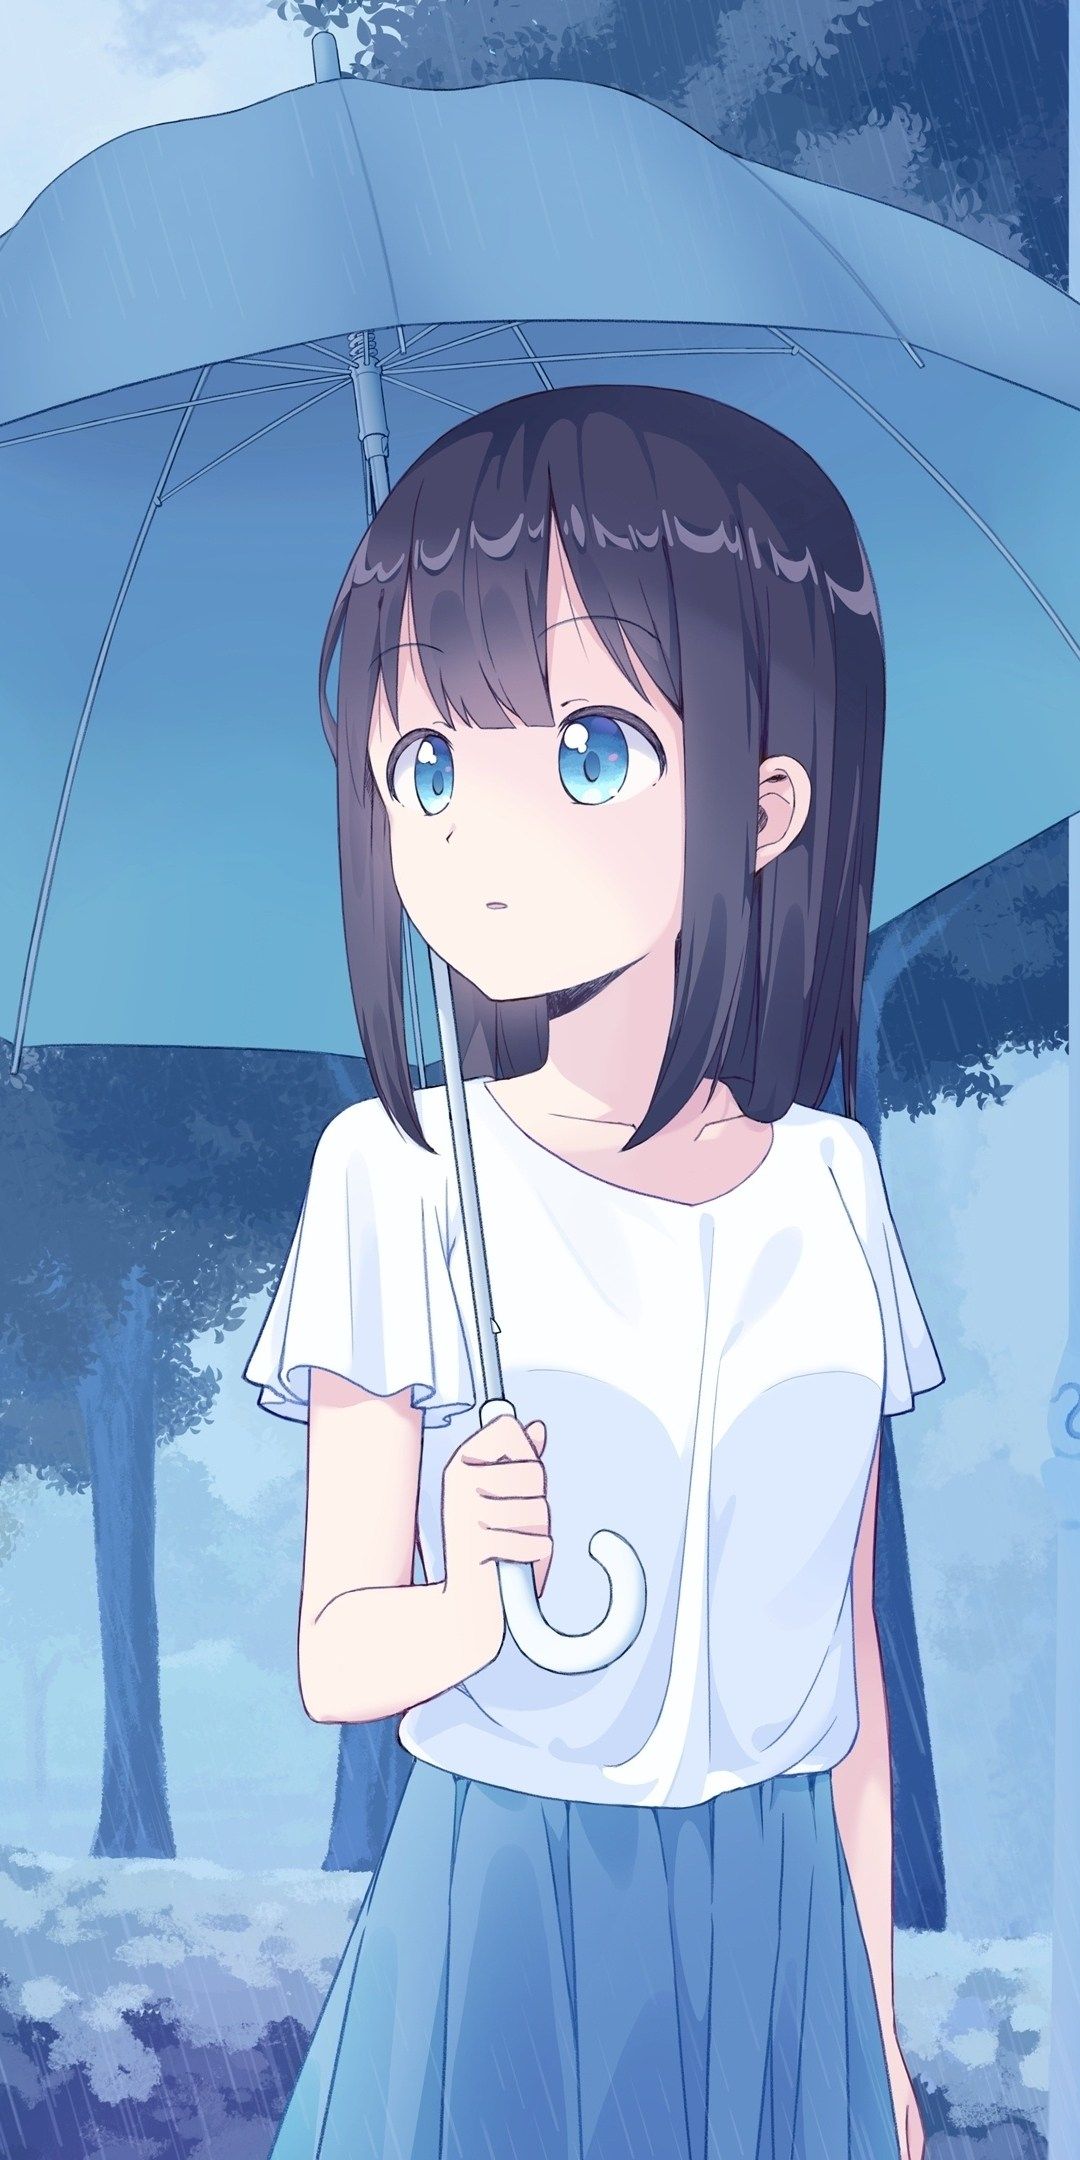 Sad Cute Anime Girl Aesthetic Wallpaper .novocom.top